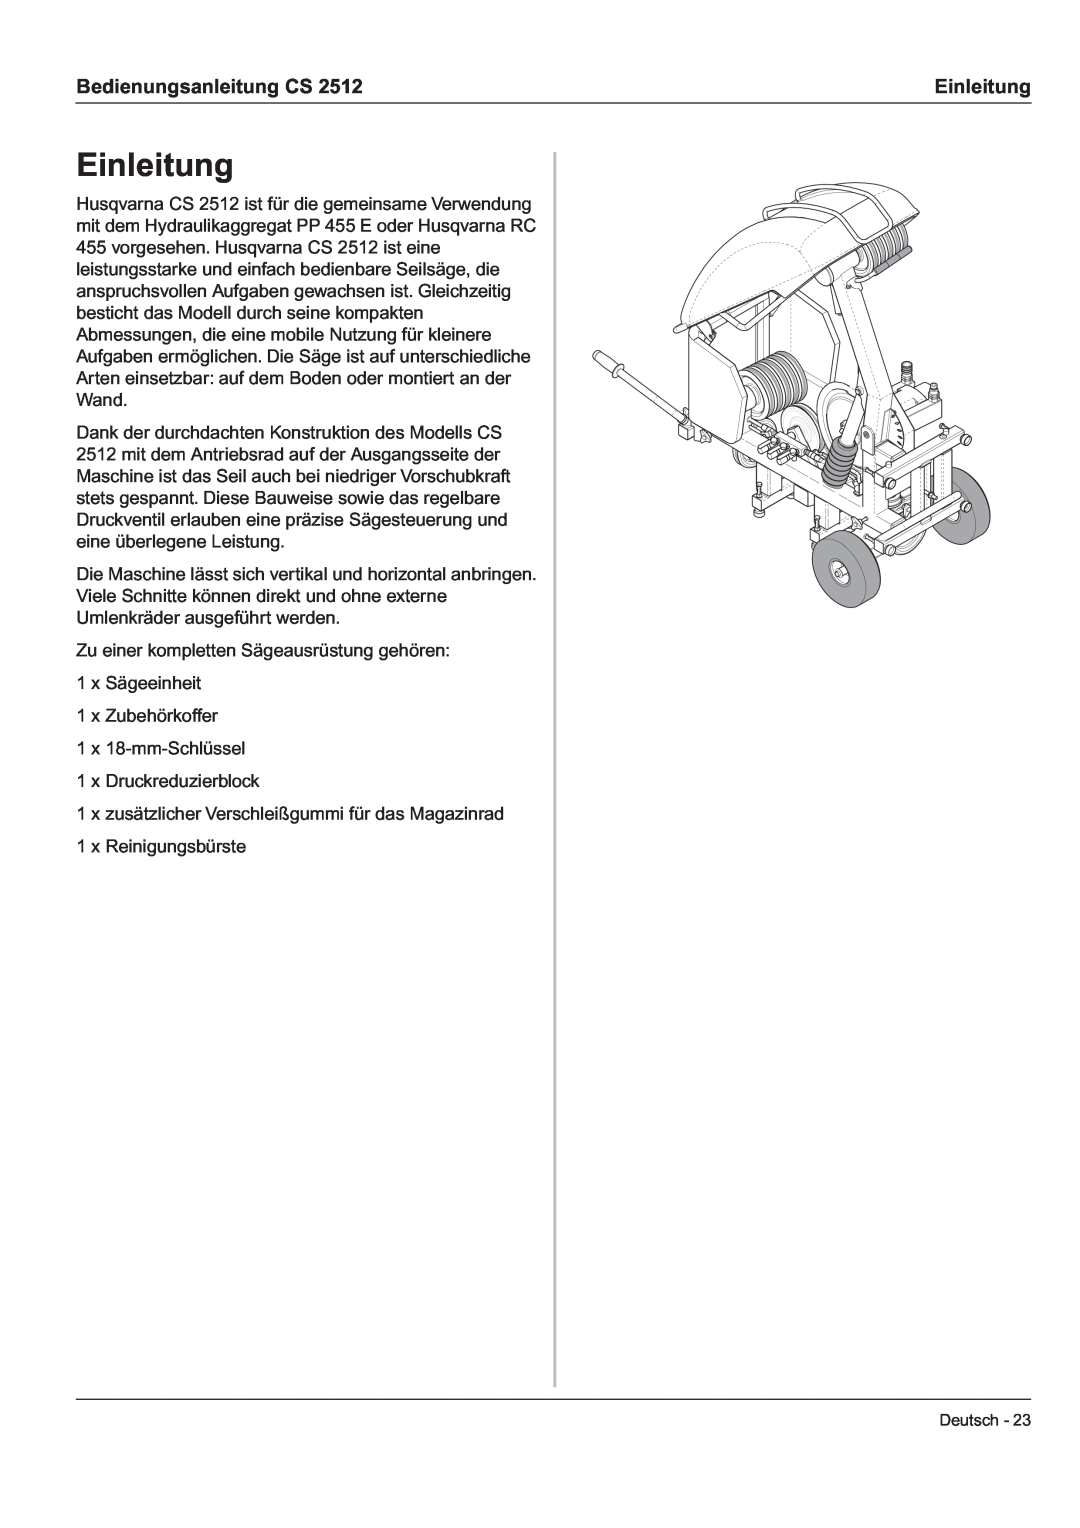 Husqvarna CS 2512 manual Einleitung, Bedienungsanleitung CS 